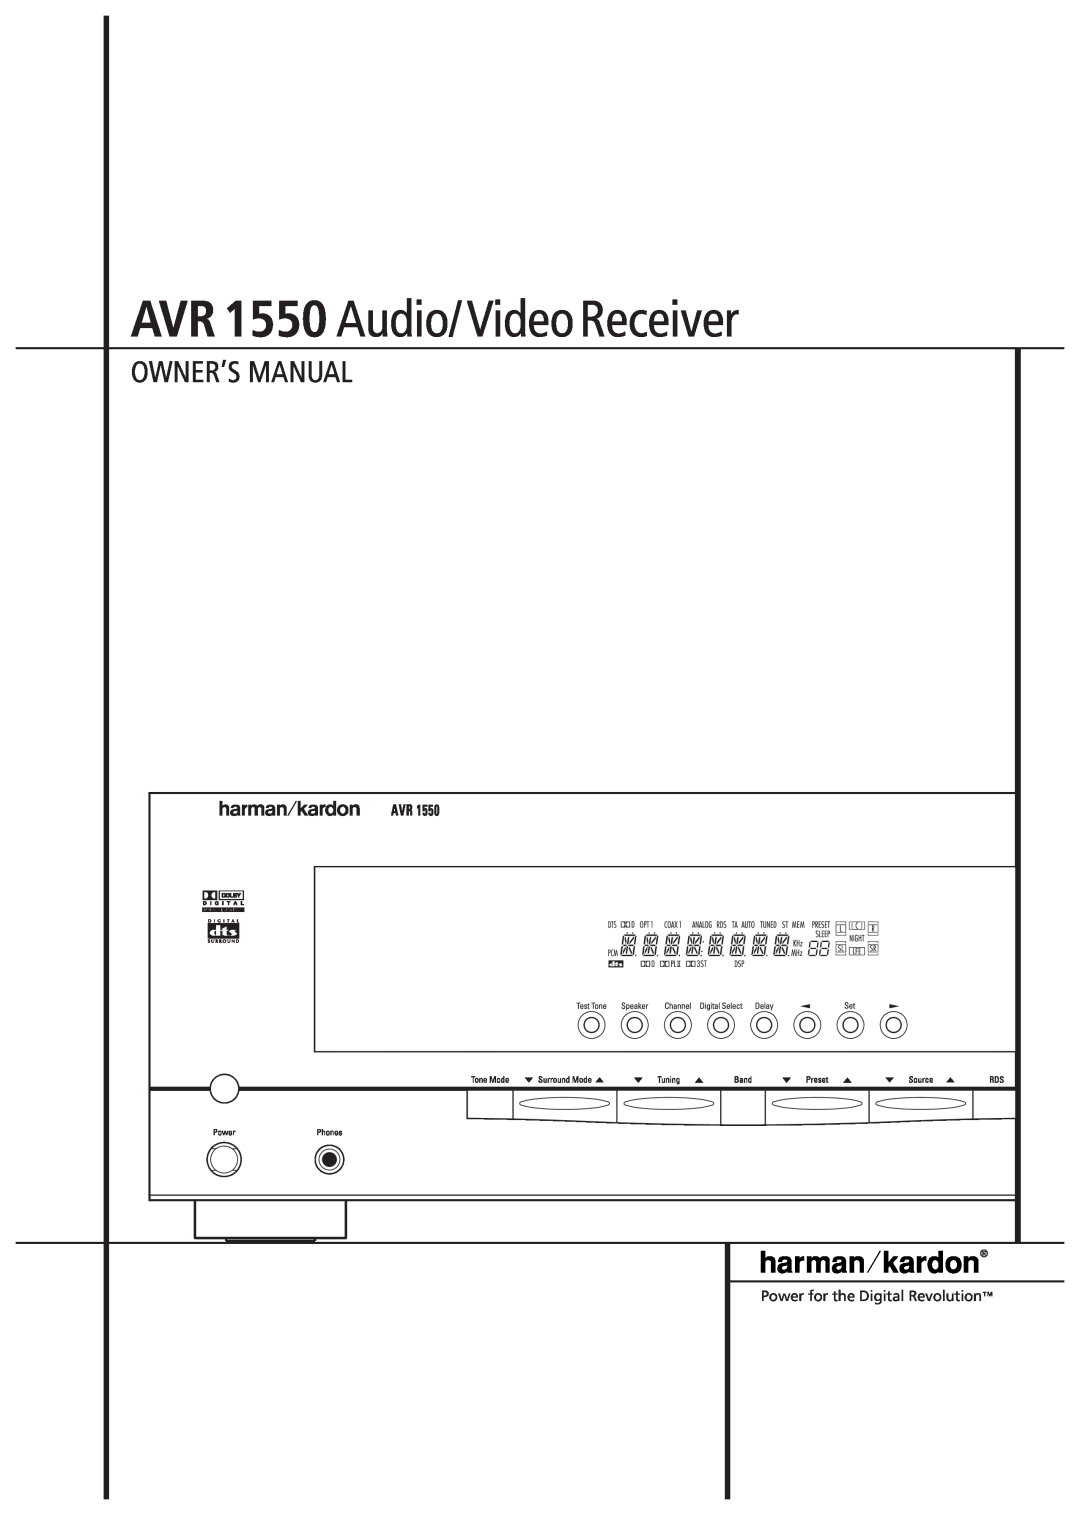 Harman-Kardon AVR1550 owner manual AVR 1550 Audio/ Video Receiver 